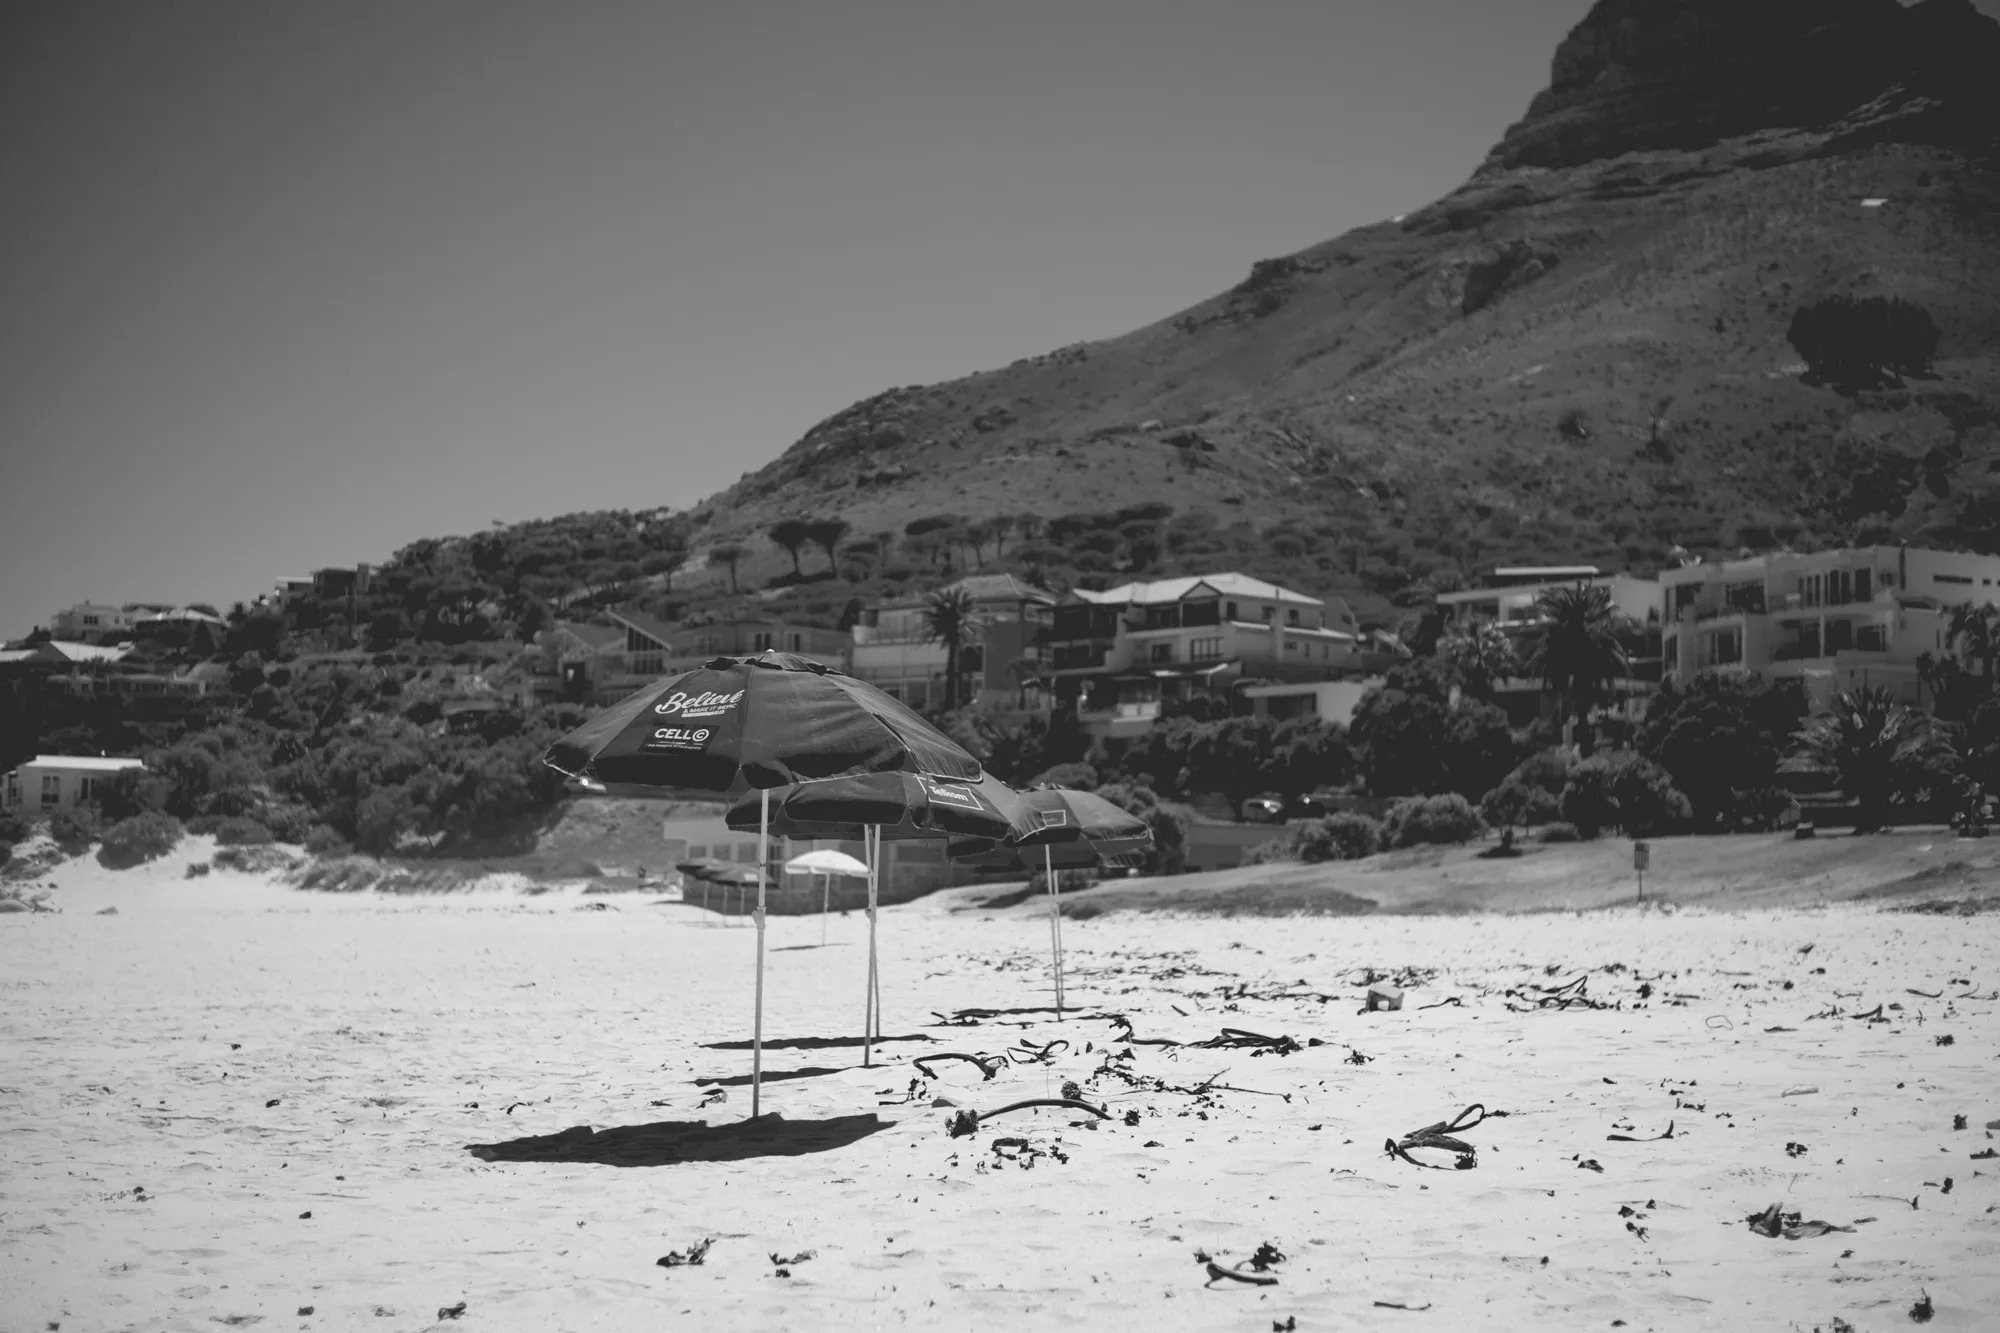 2022-02-16 - Cape Town - Umbrellas on beach